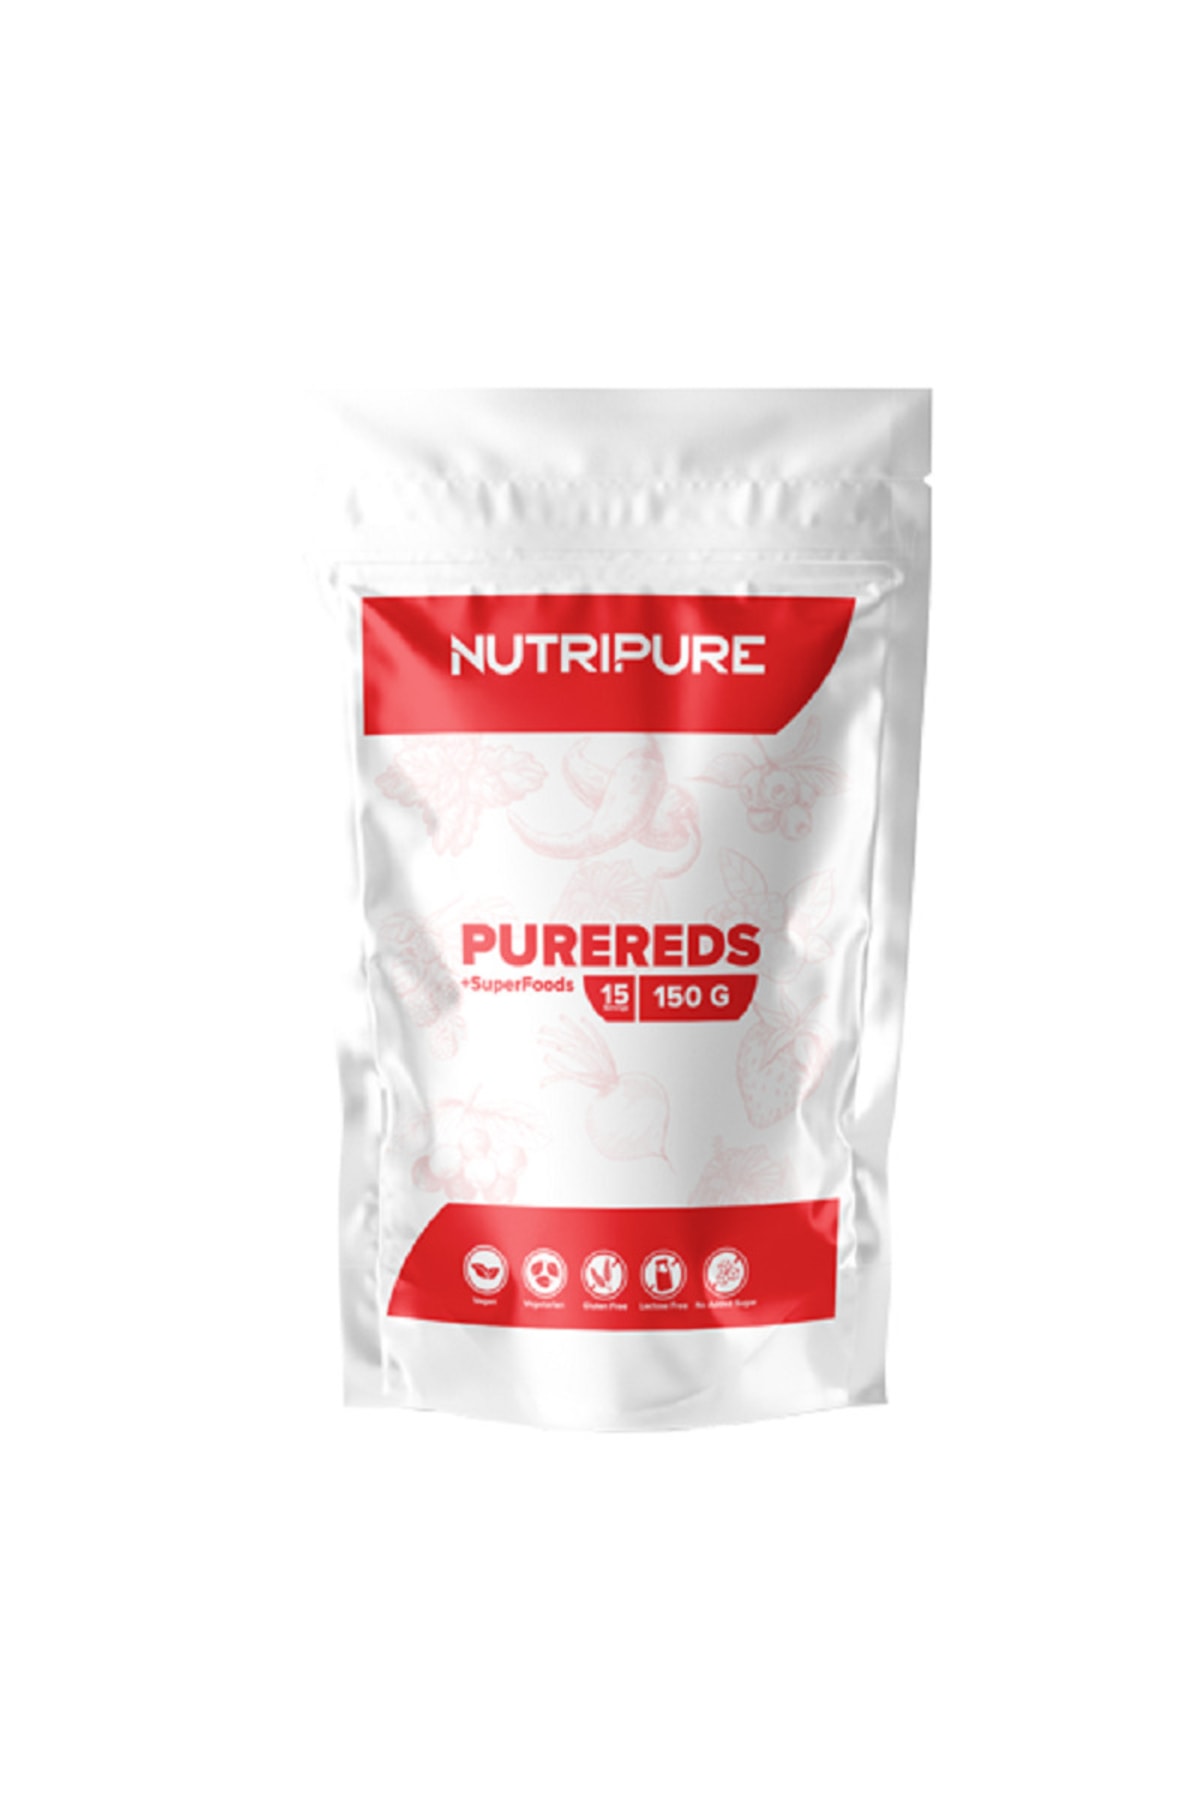 Nutripure Purereds Superfoods 150 G